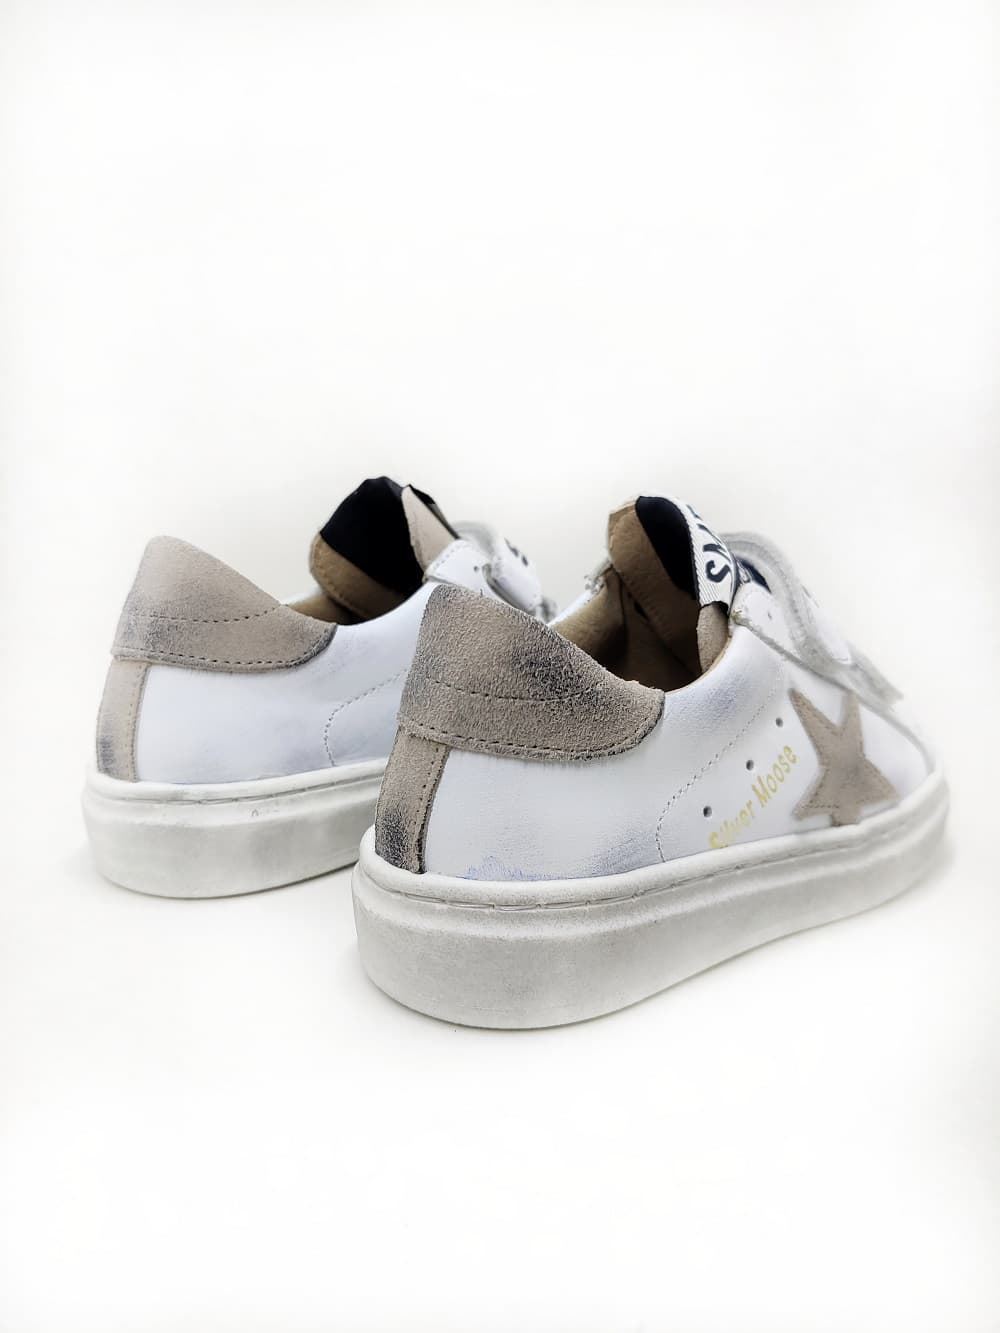 Sneakers Golden Star en piel Blanco Taupe con Velcro Yowas - Imagen 3